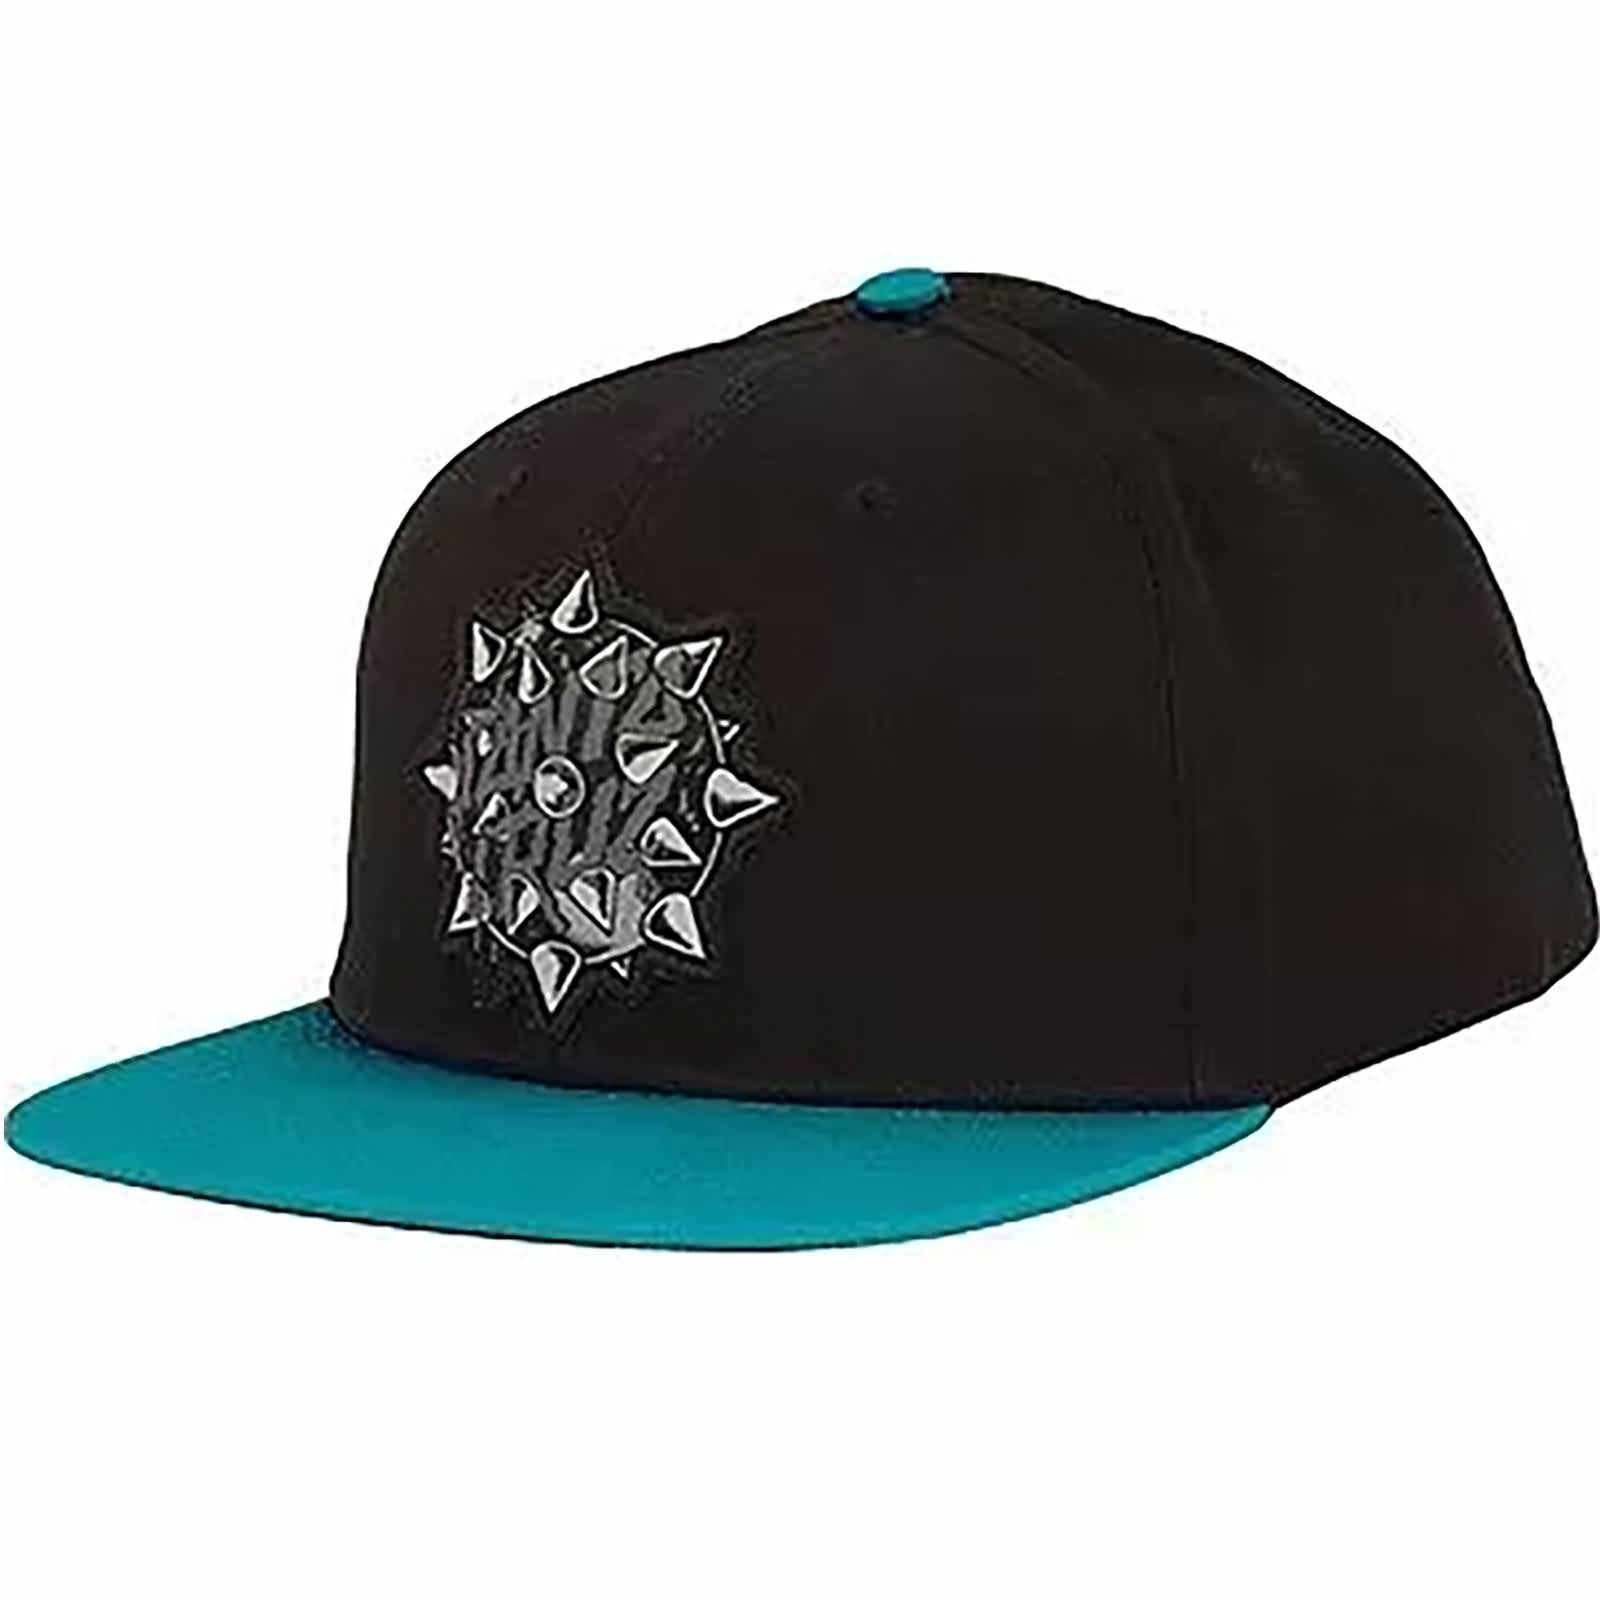 Santa Cruz Mace Dot Men's Snapback Adjustable Hats (Brand New